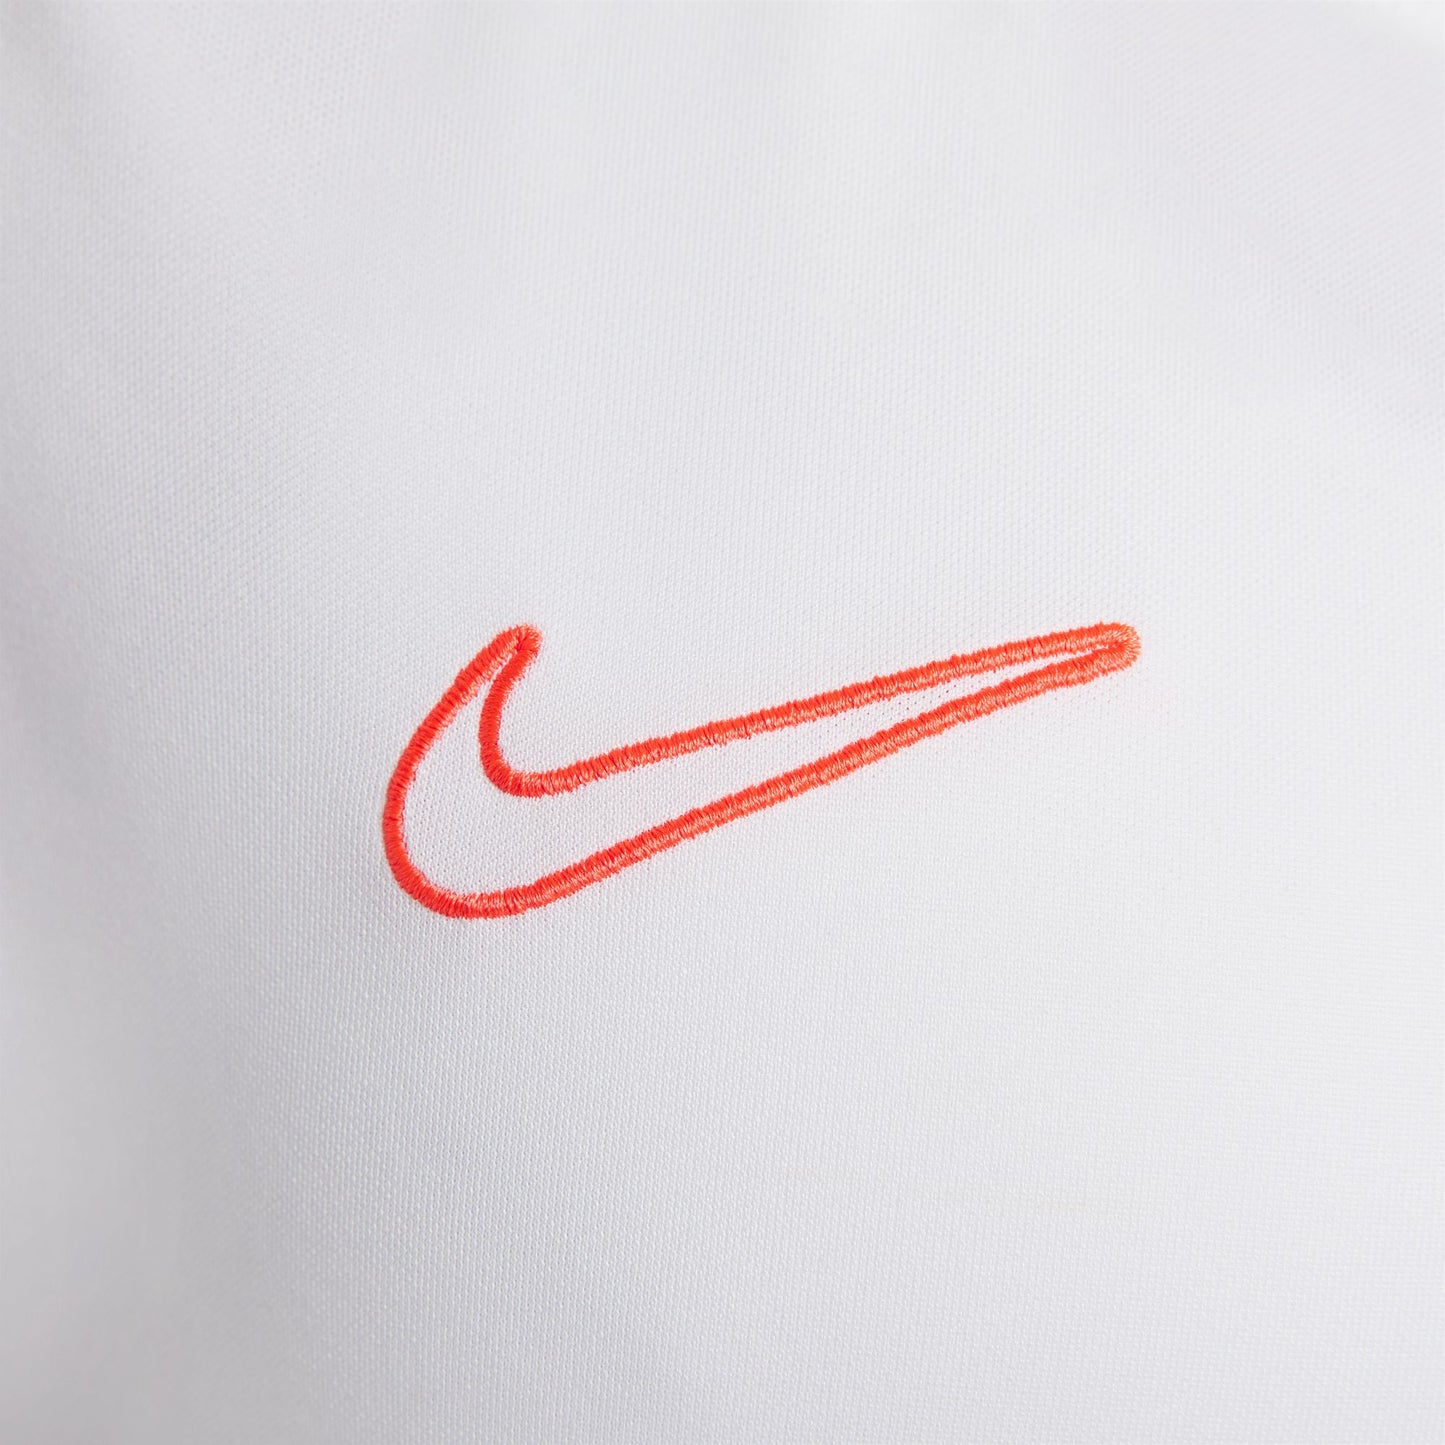 Nike Dri-FIT Academy Women's Short-Sleeve Soccer Top